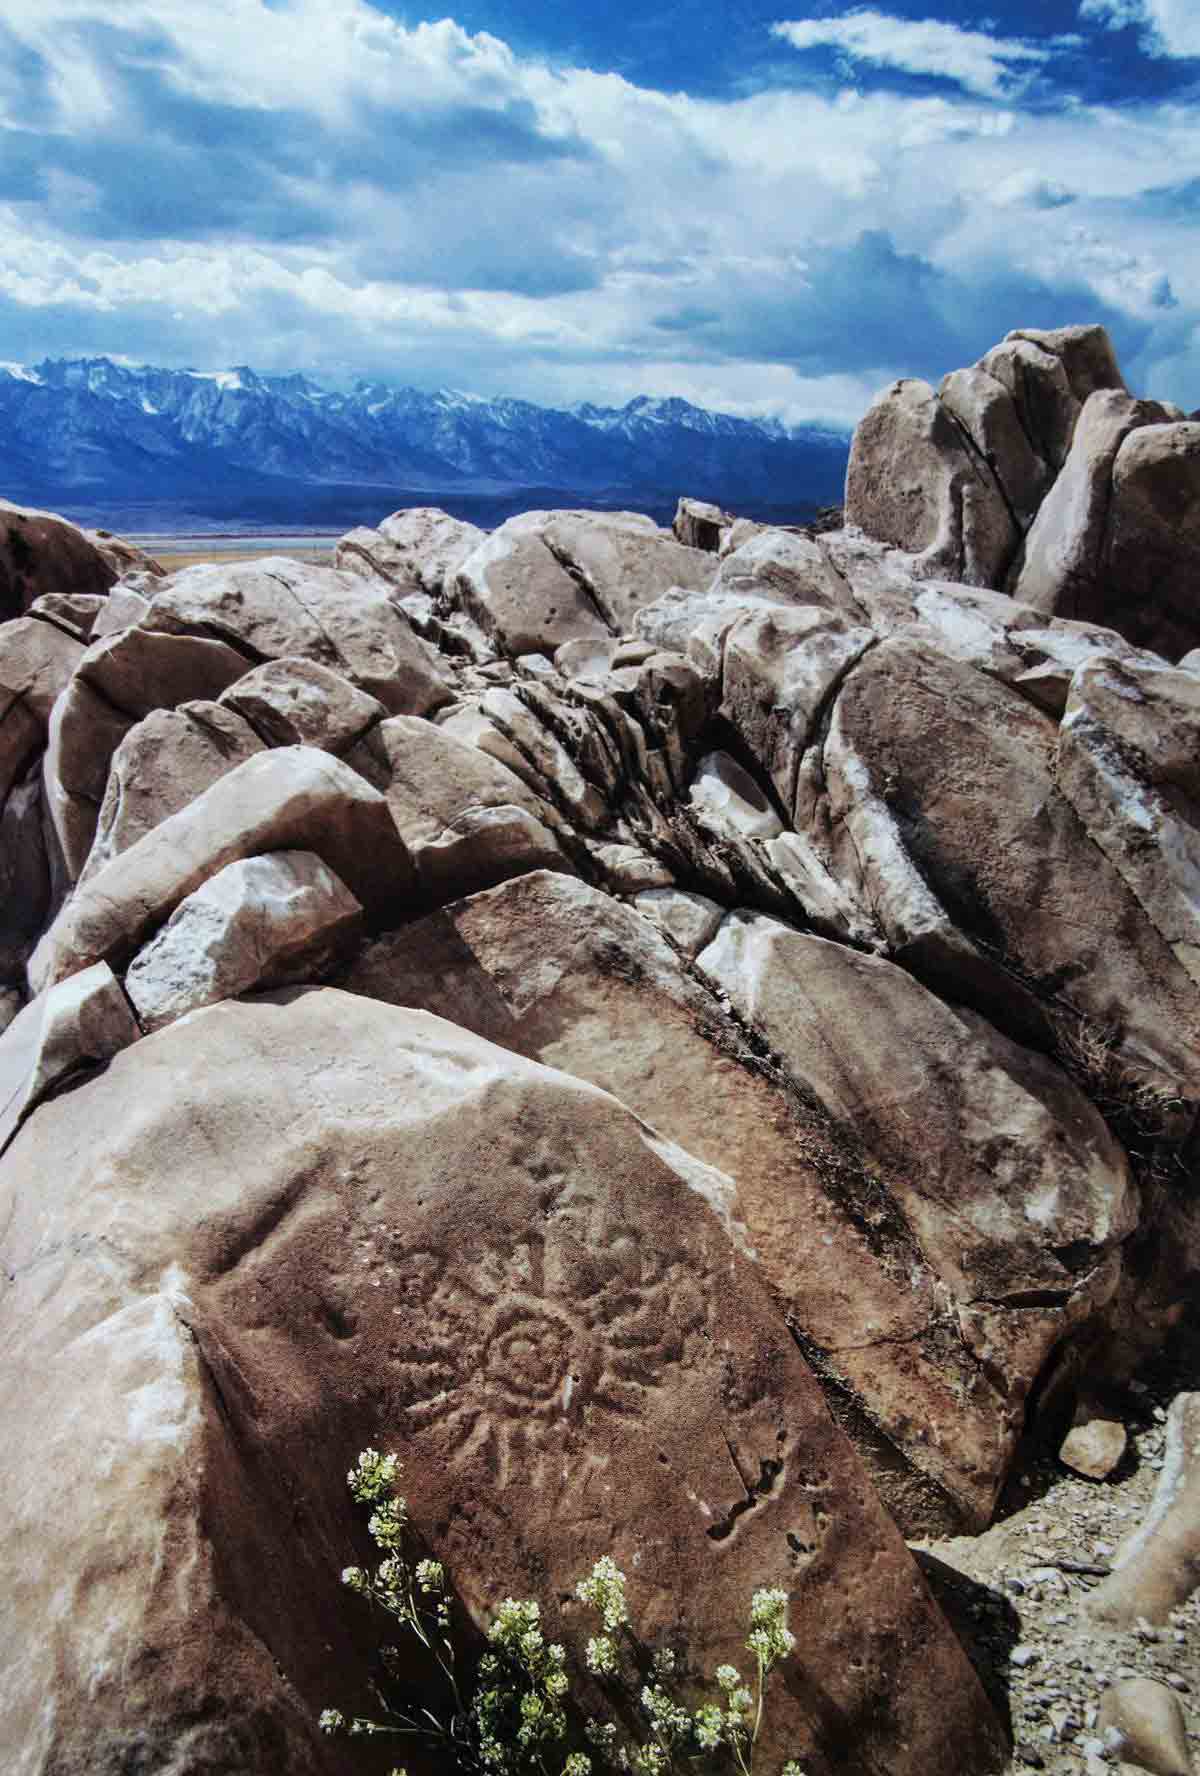 Rayed concentric circles rock art dolomite marble California America USA. Photographed by Ekkehart Malotki.